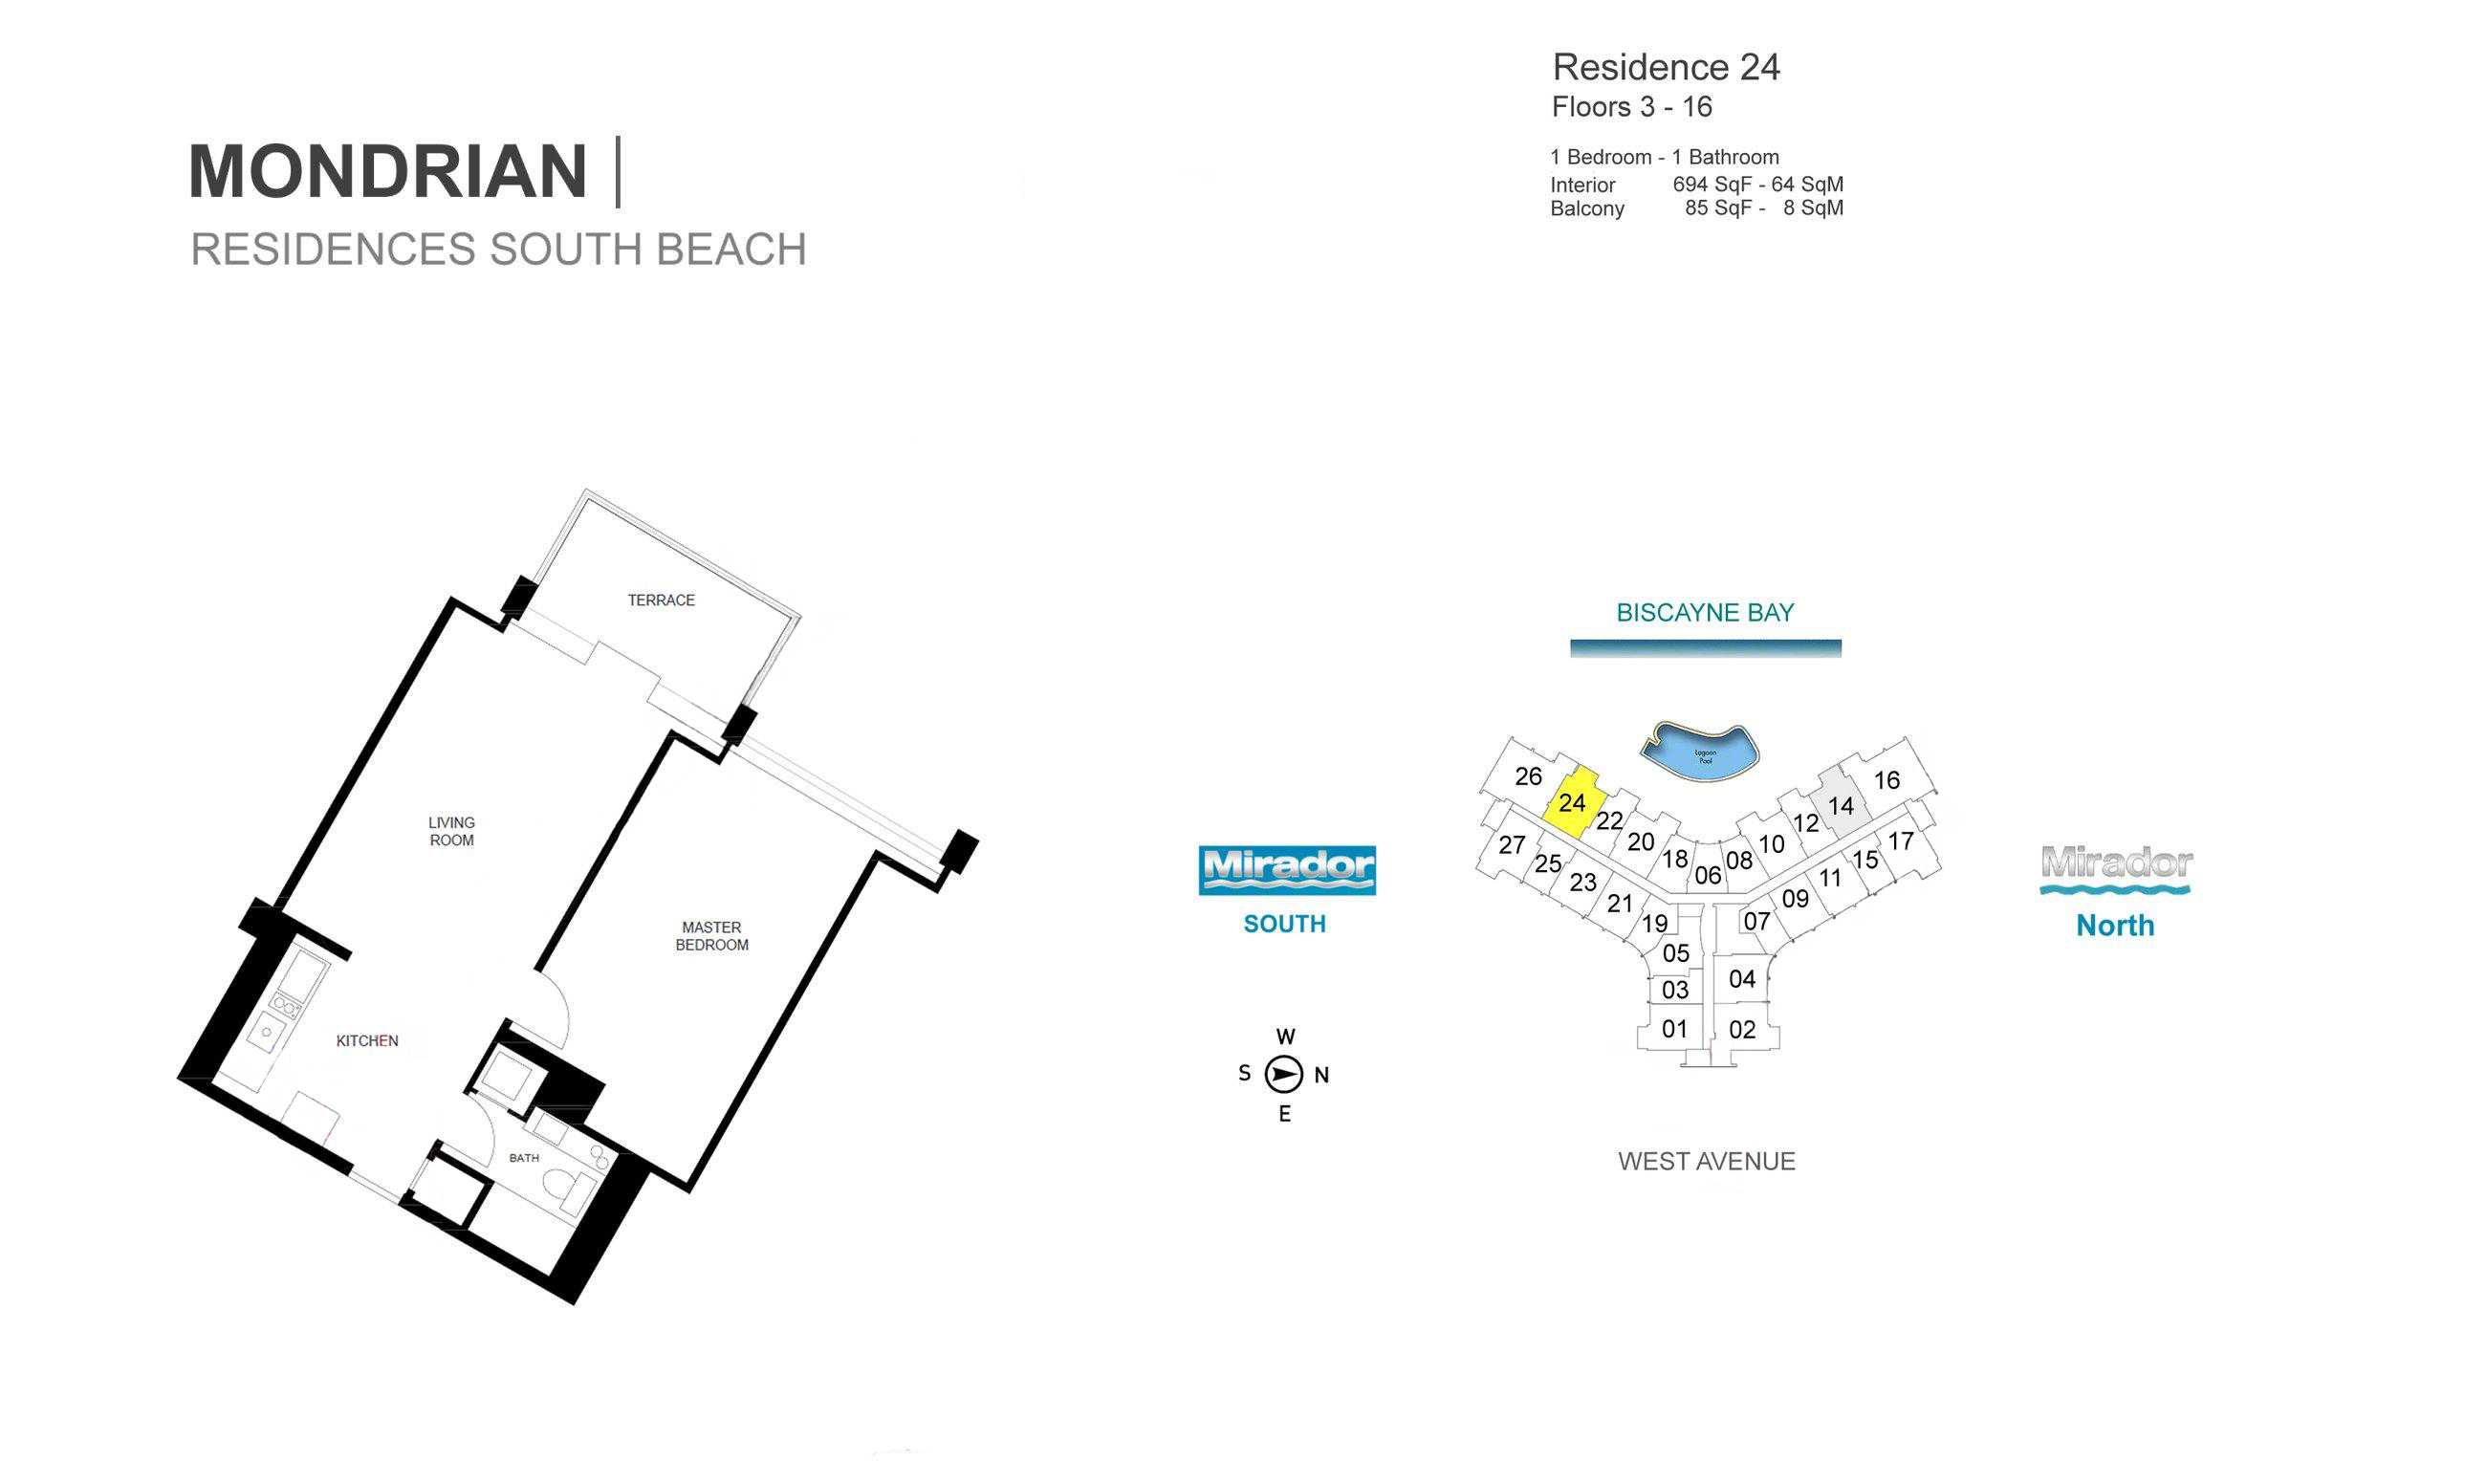 Mondrian South Beach Residence 24